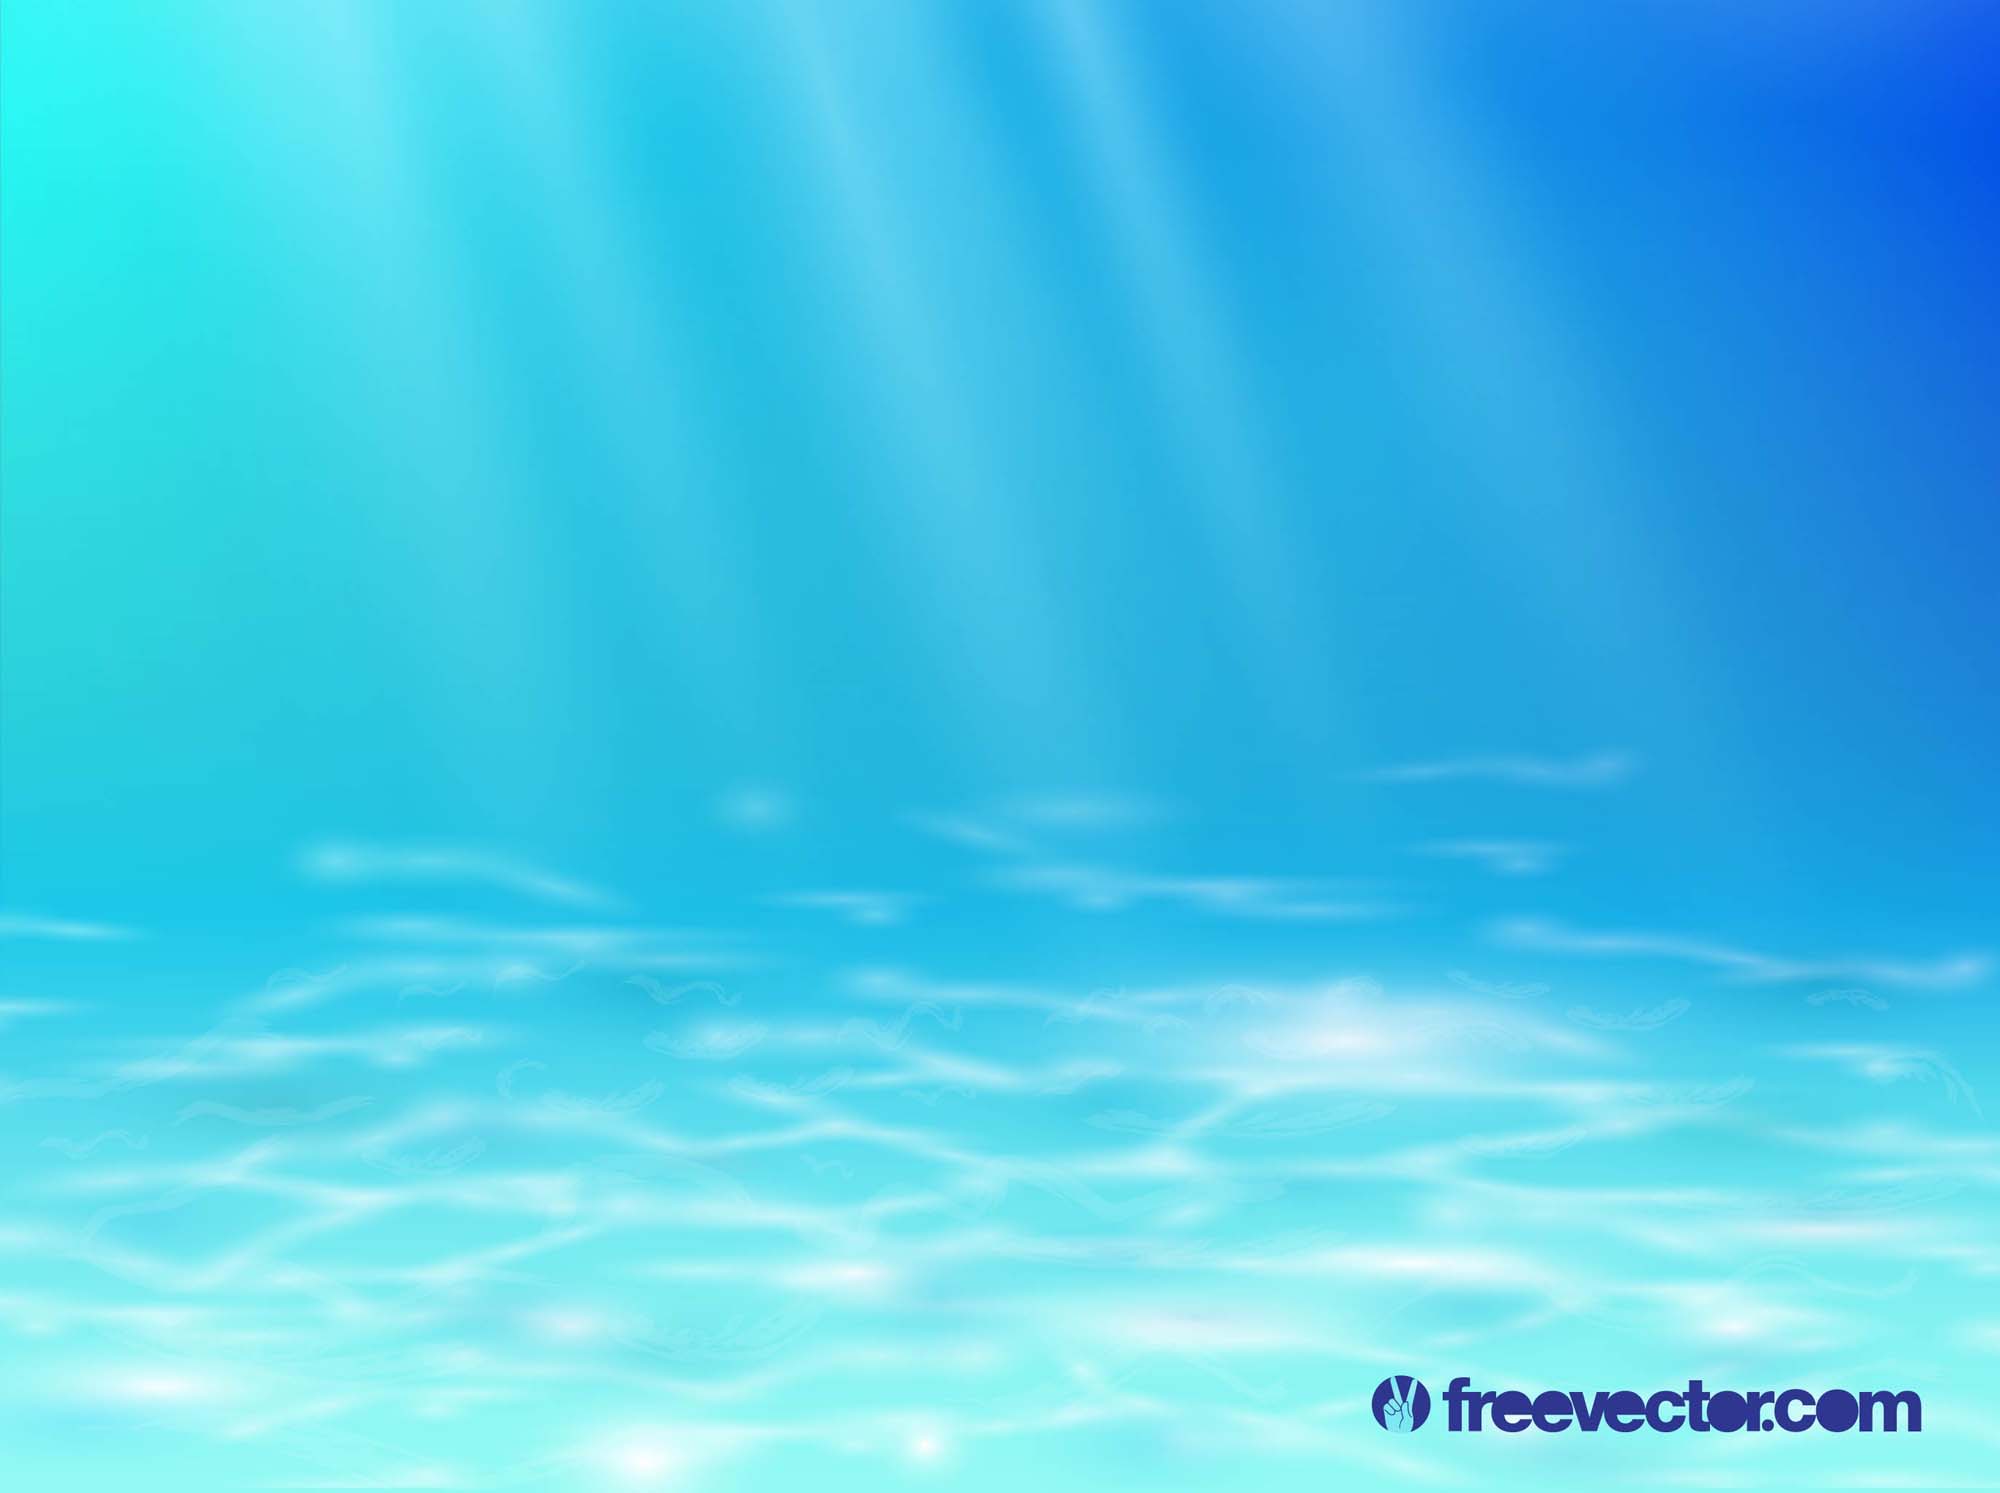 Realistic underwater illustration.